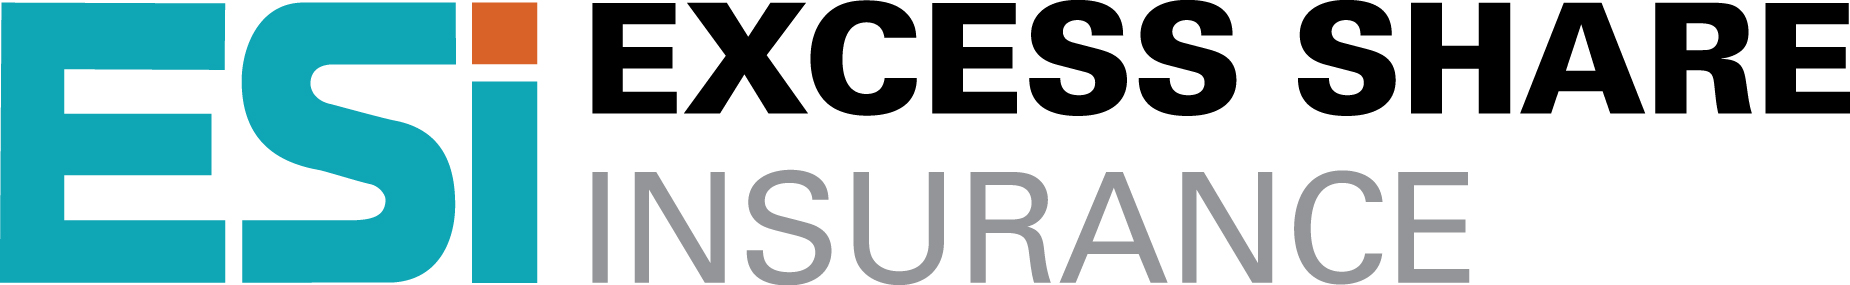 ESI Excess Share Insurance logo